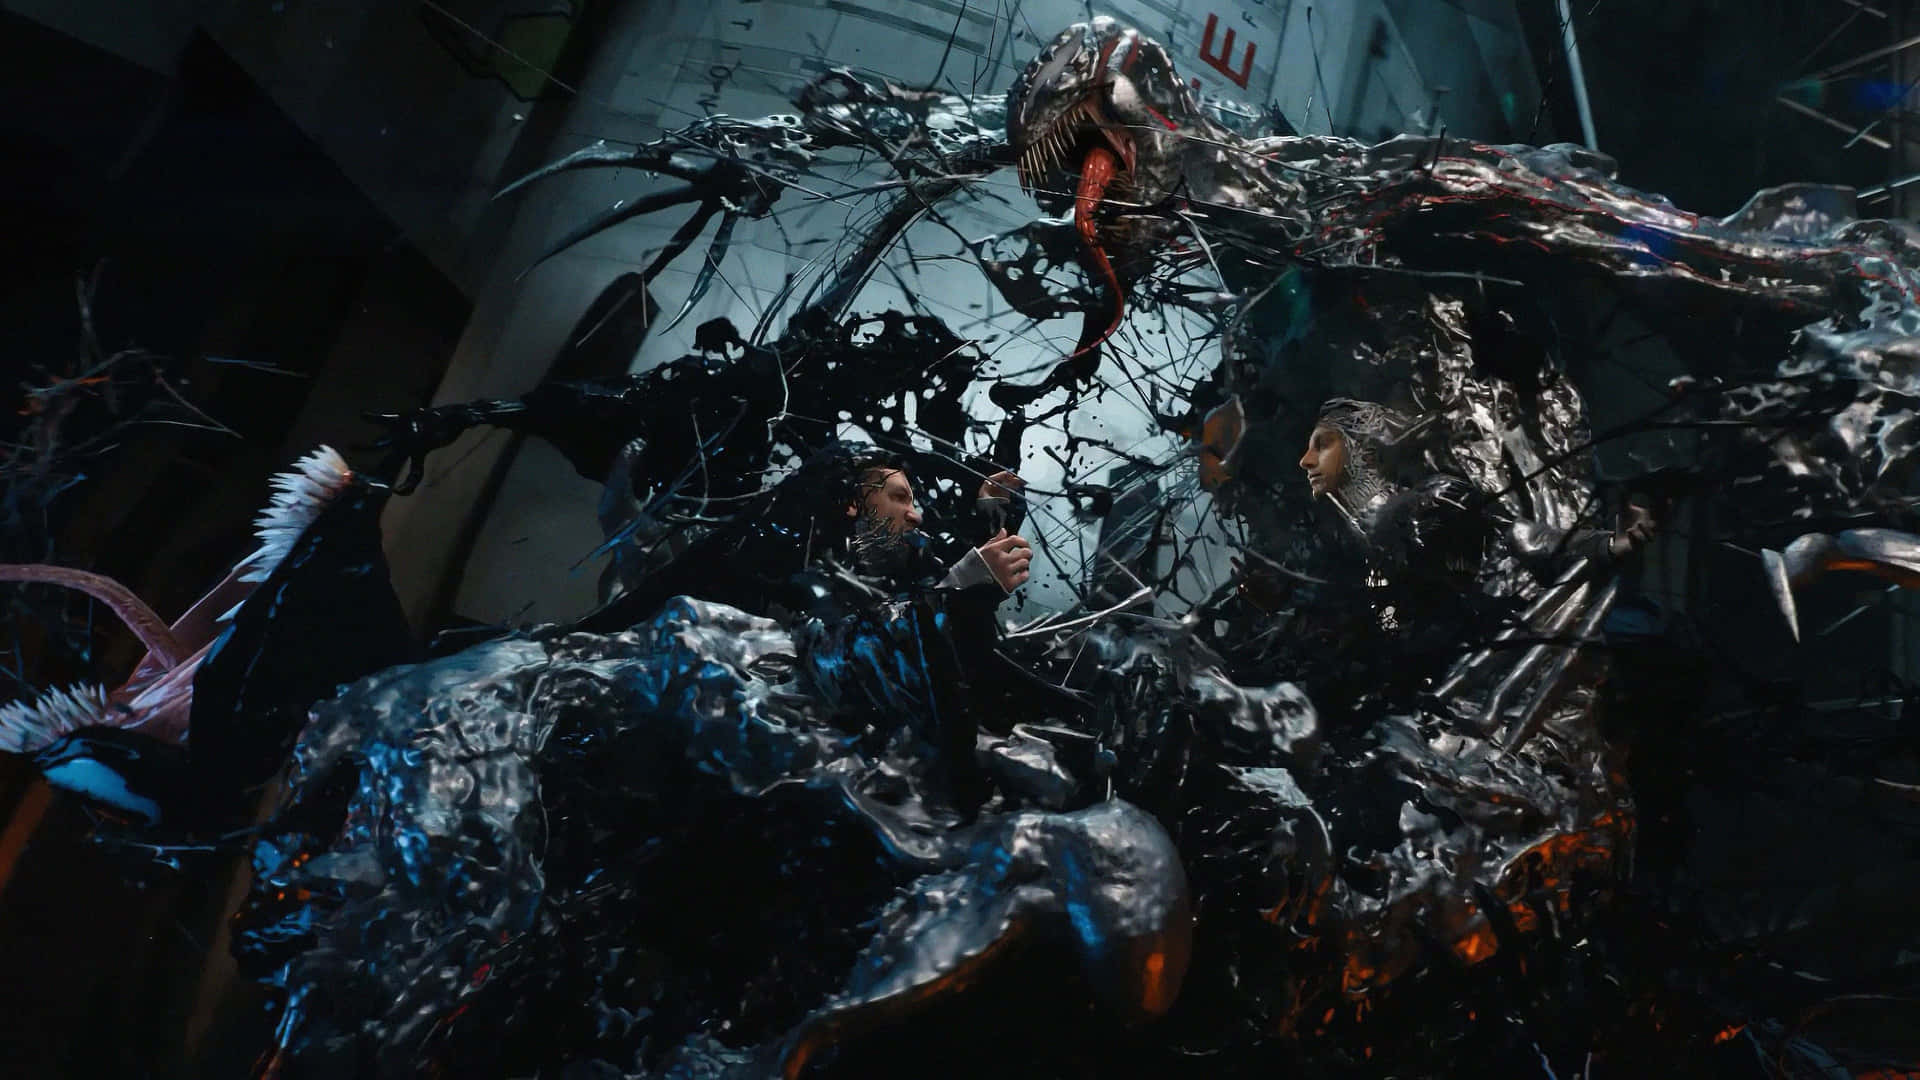 Epic Battle: Carnage Vs Venom Wallpaper